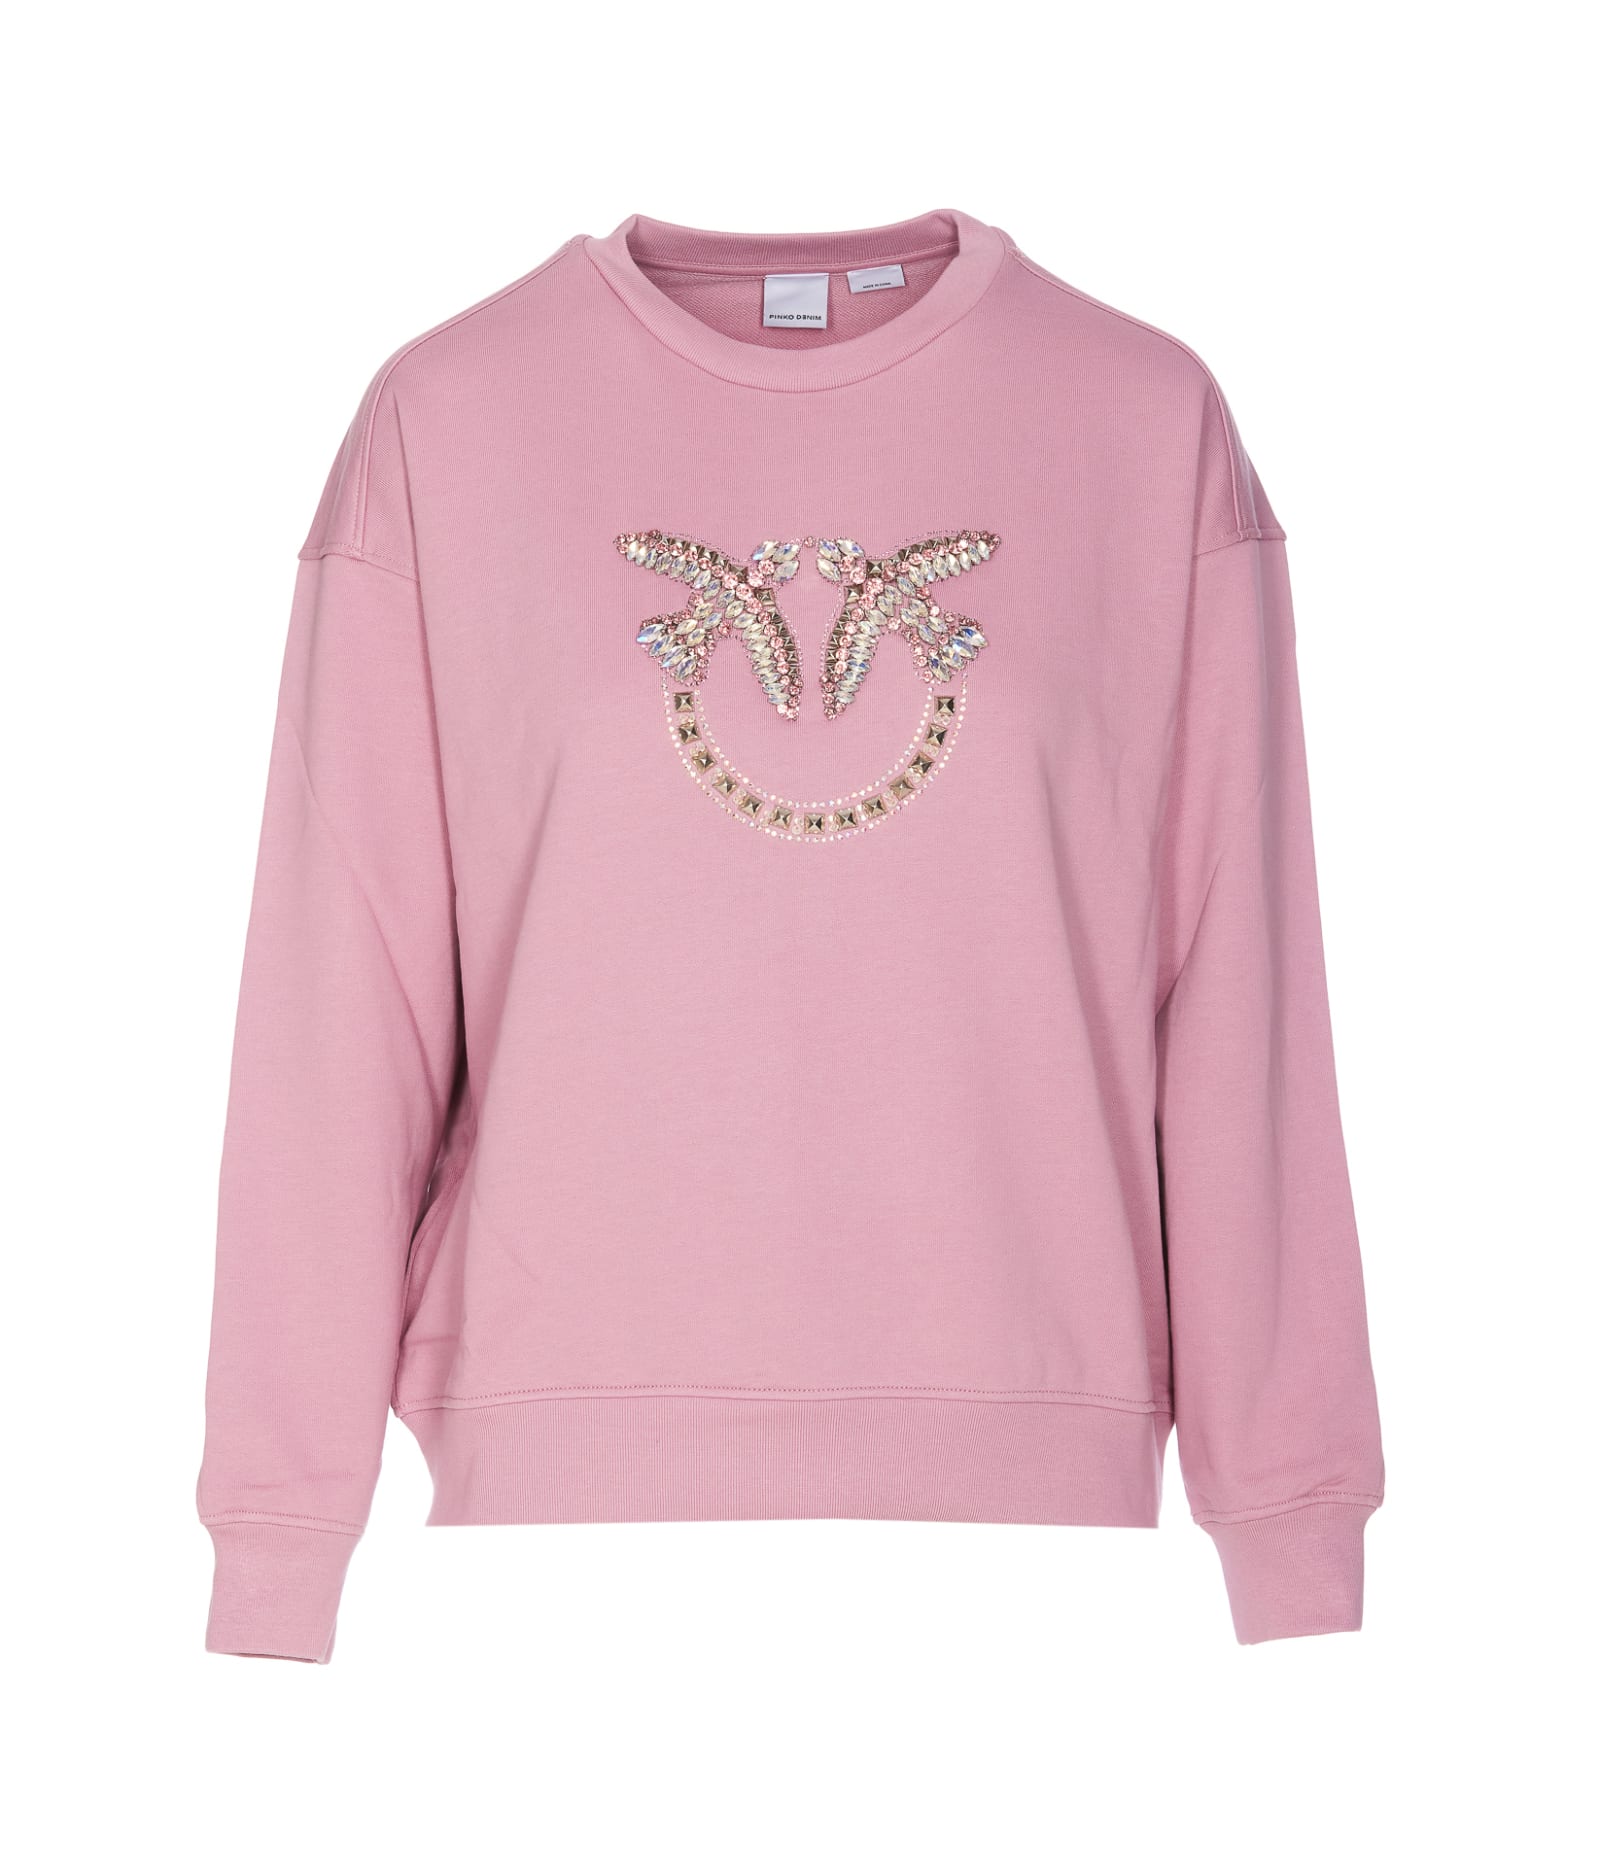 Sweatshirt With Love Birds Embroidery